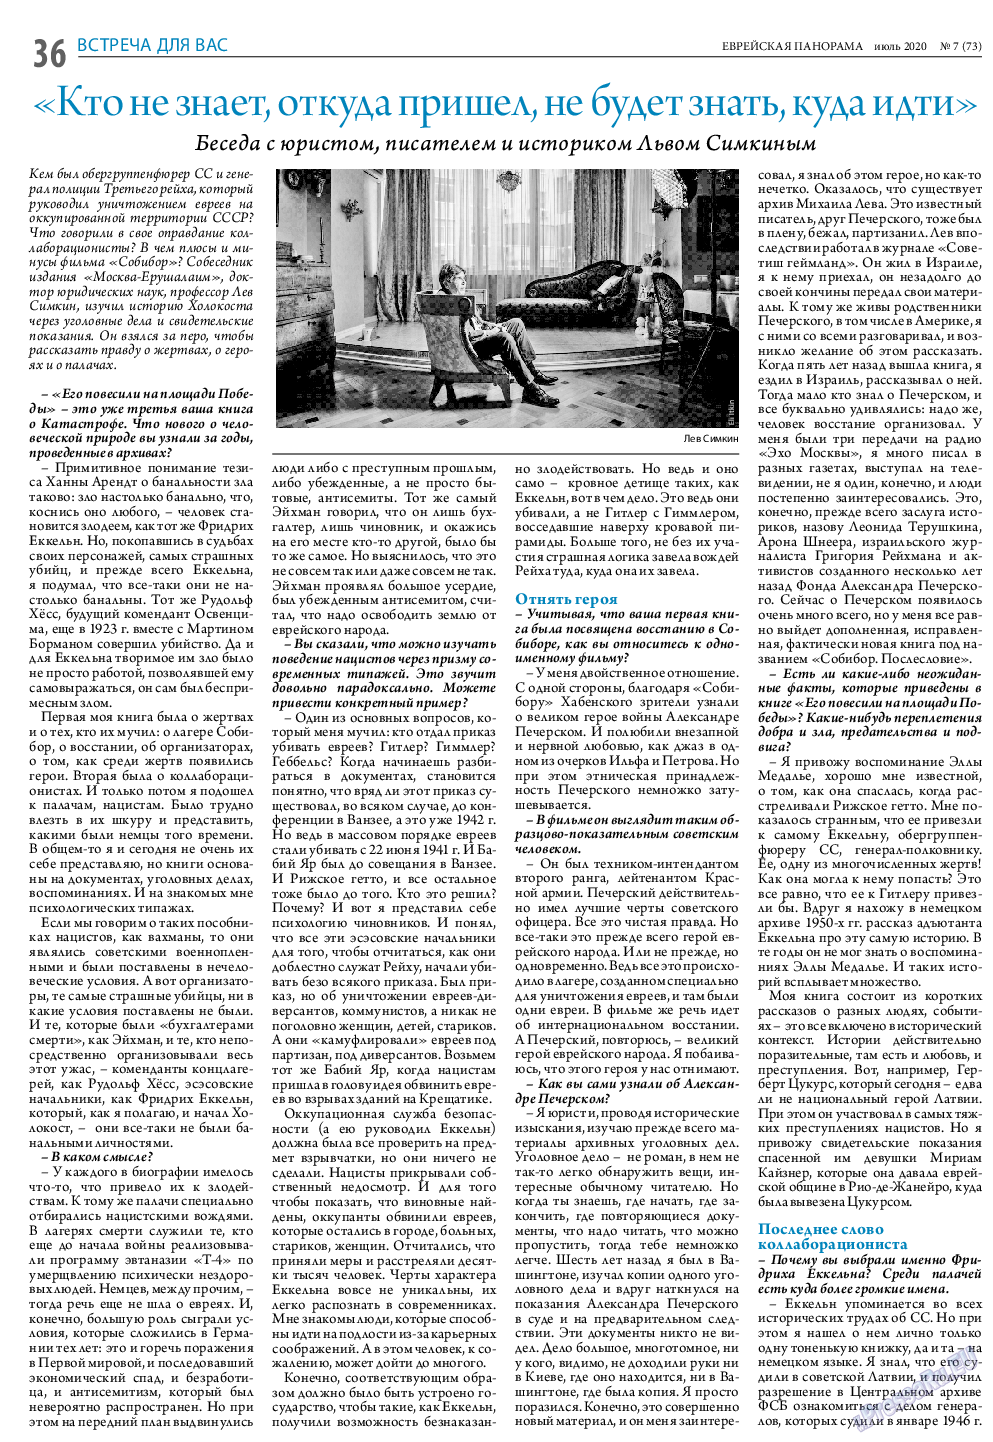 Еврейская панорама, газета. 2020 №7 стр.36